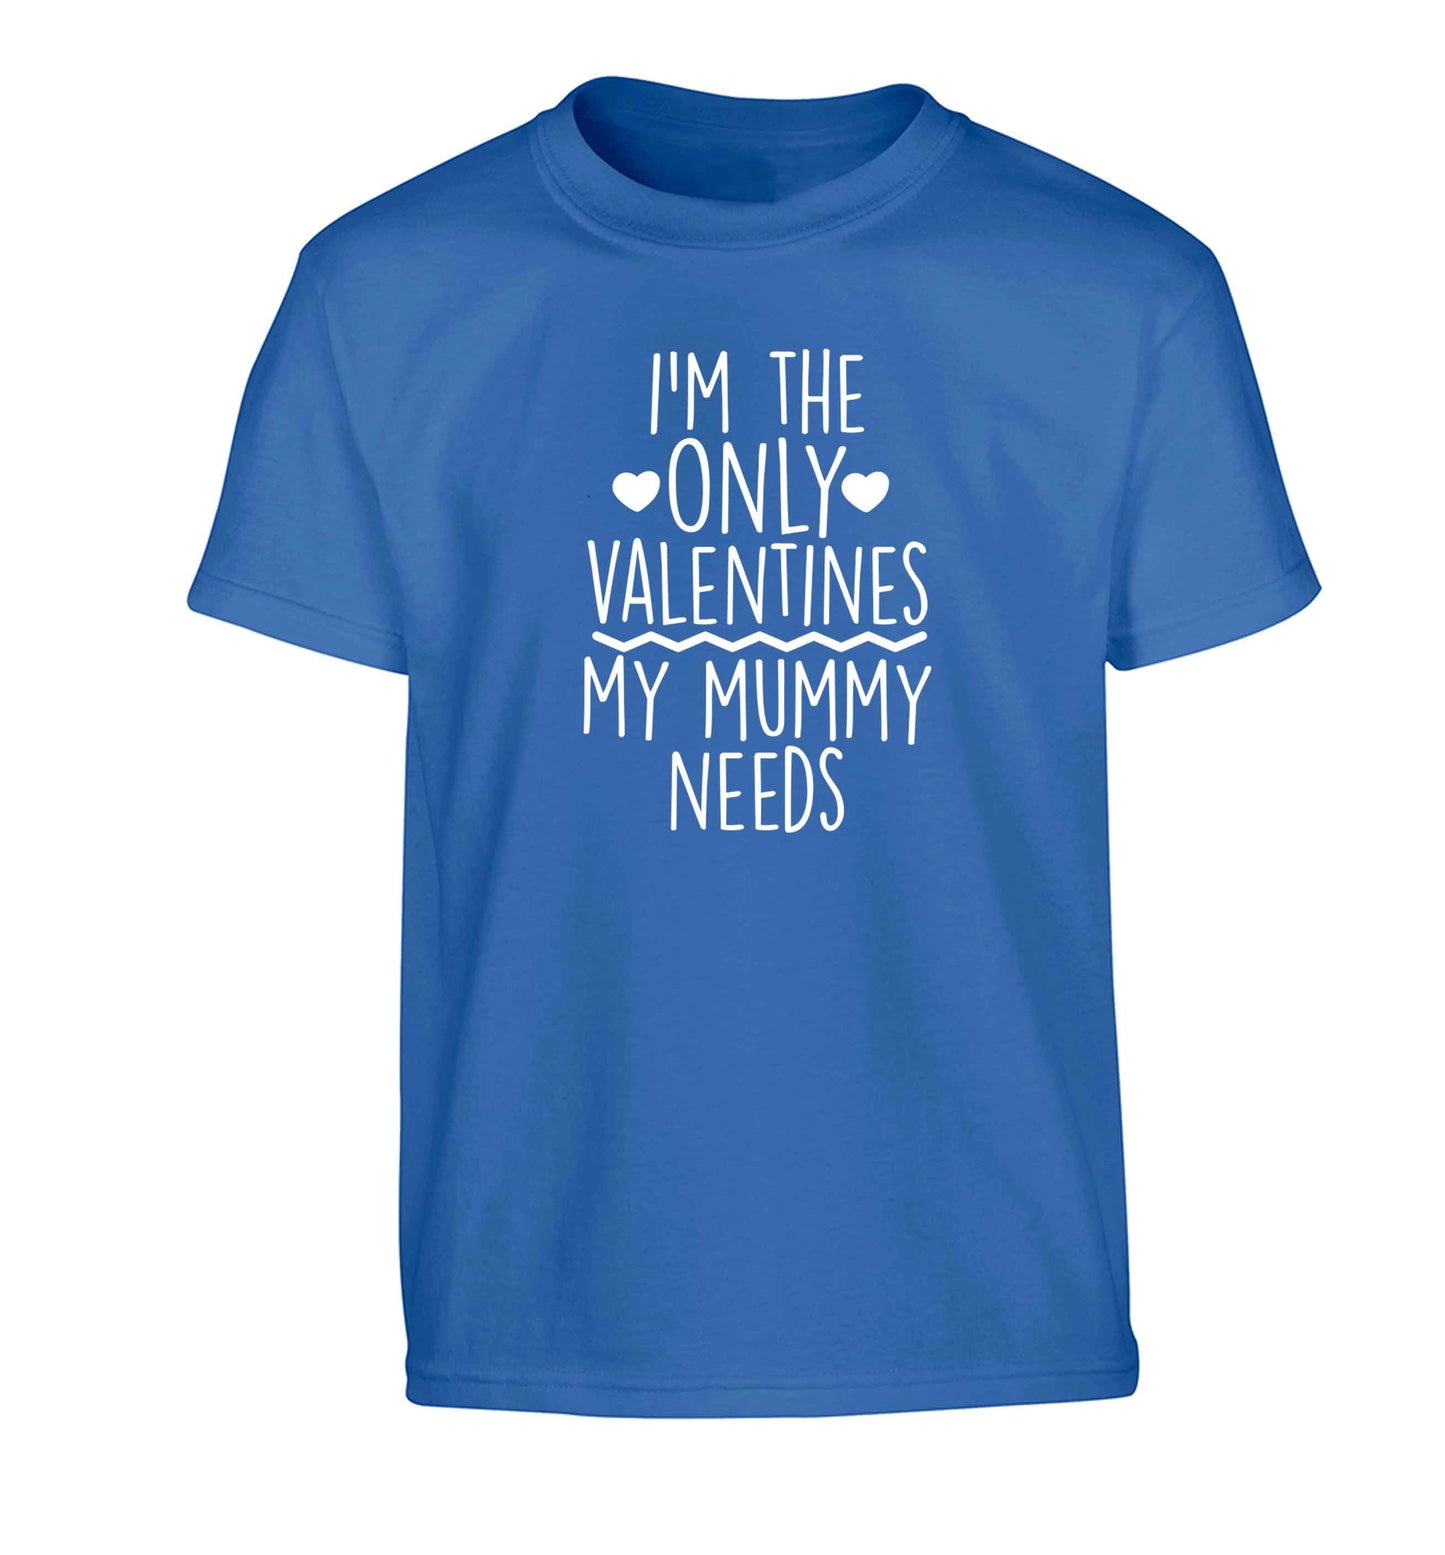 I'm the only valentines my mummy needs Children's blue Tshirt 12-13 Years